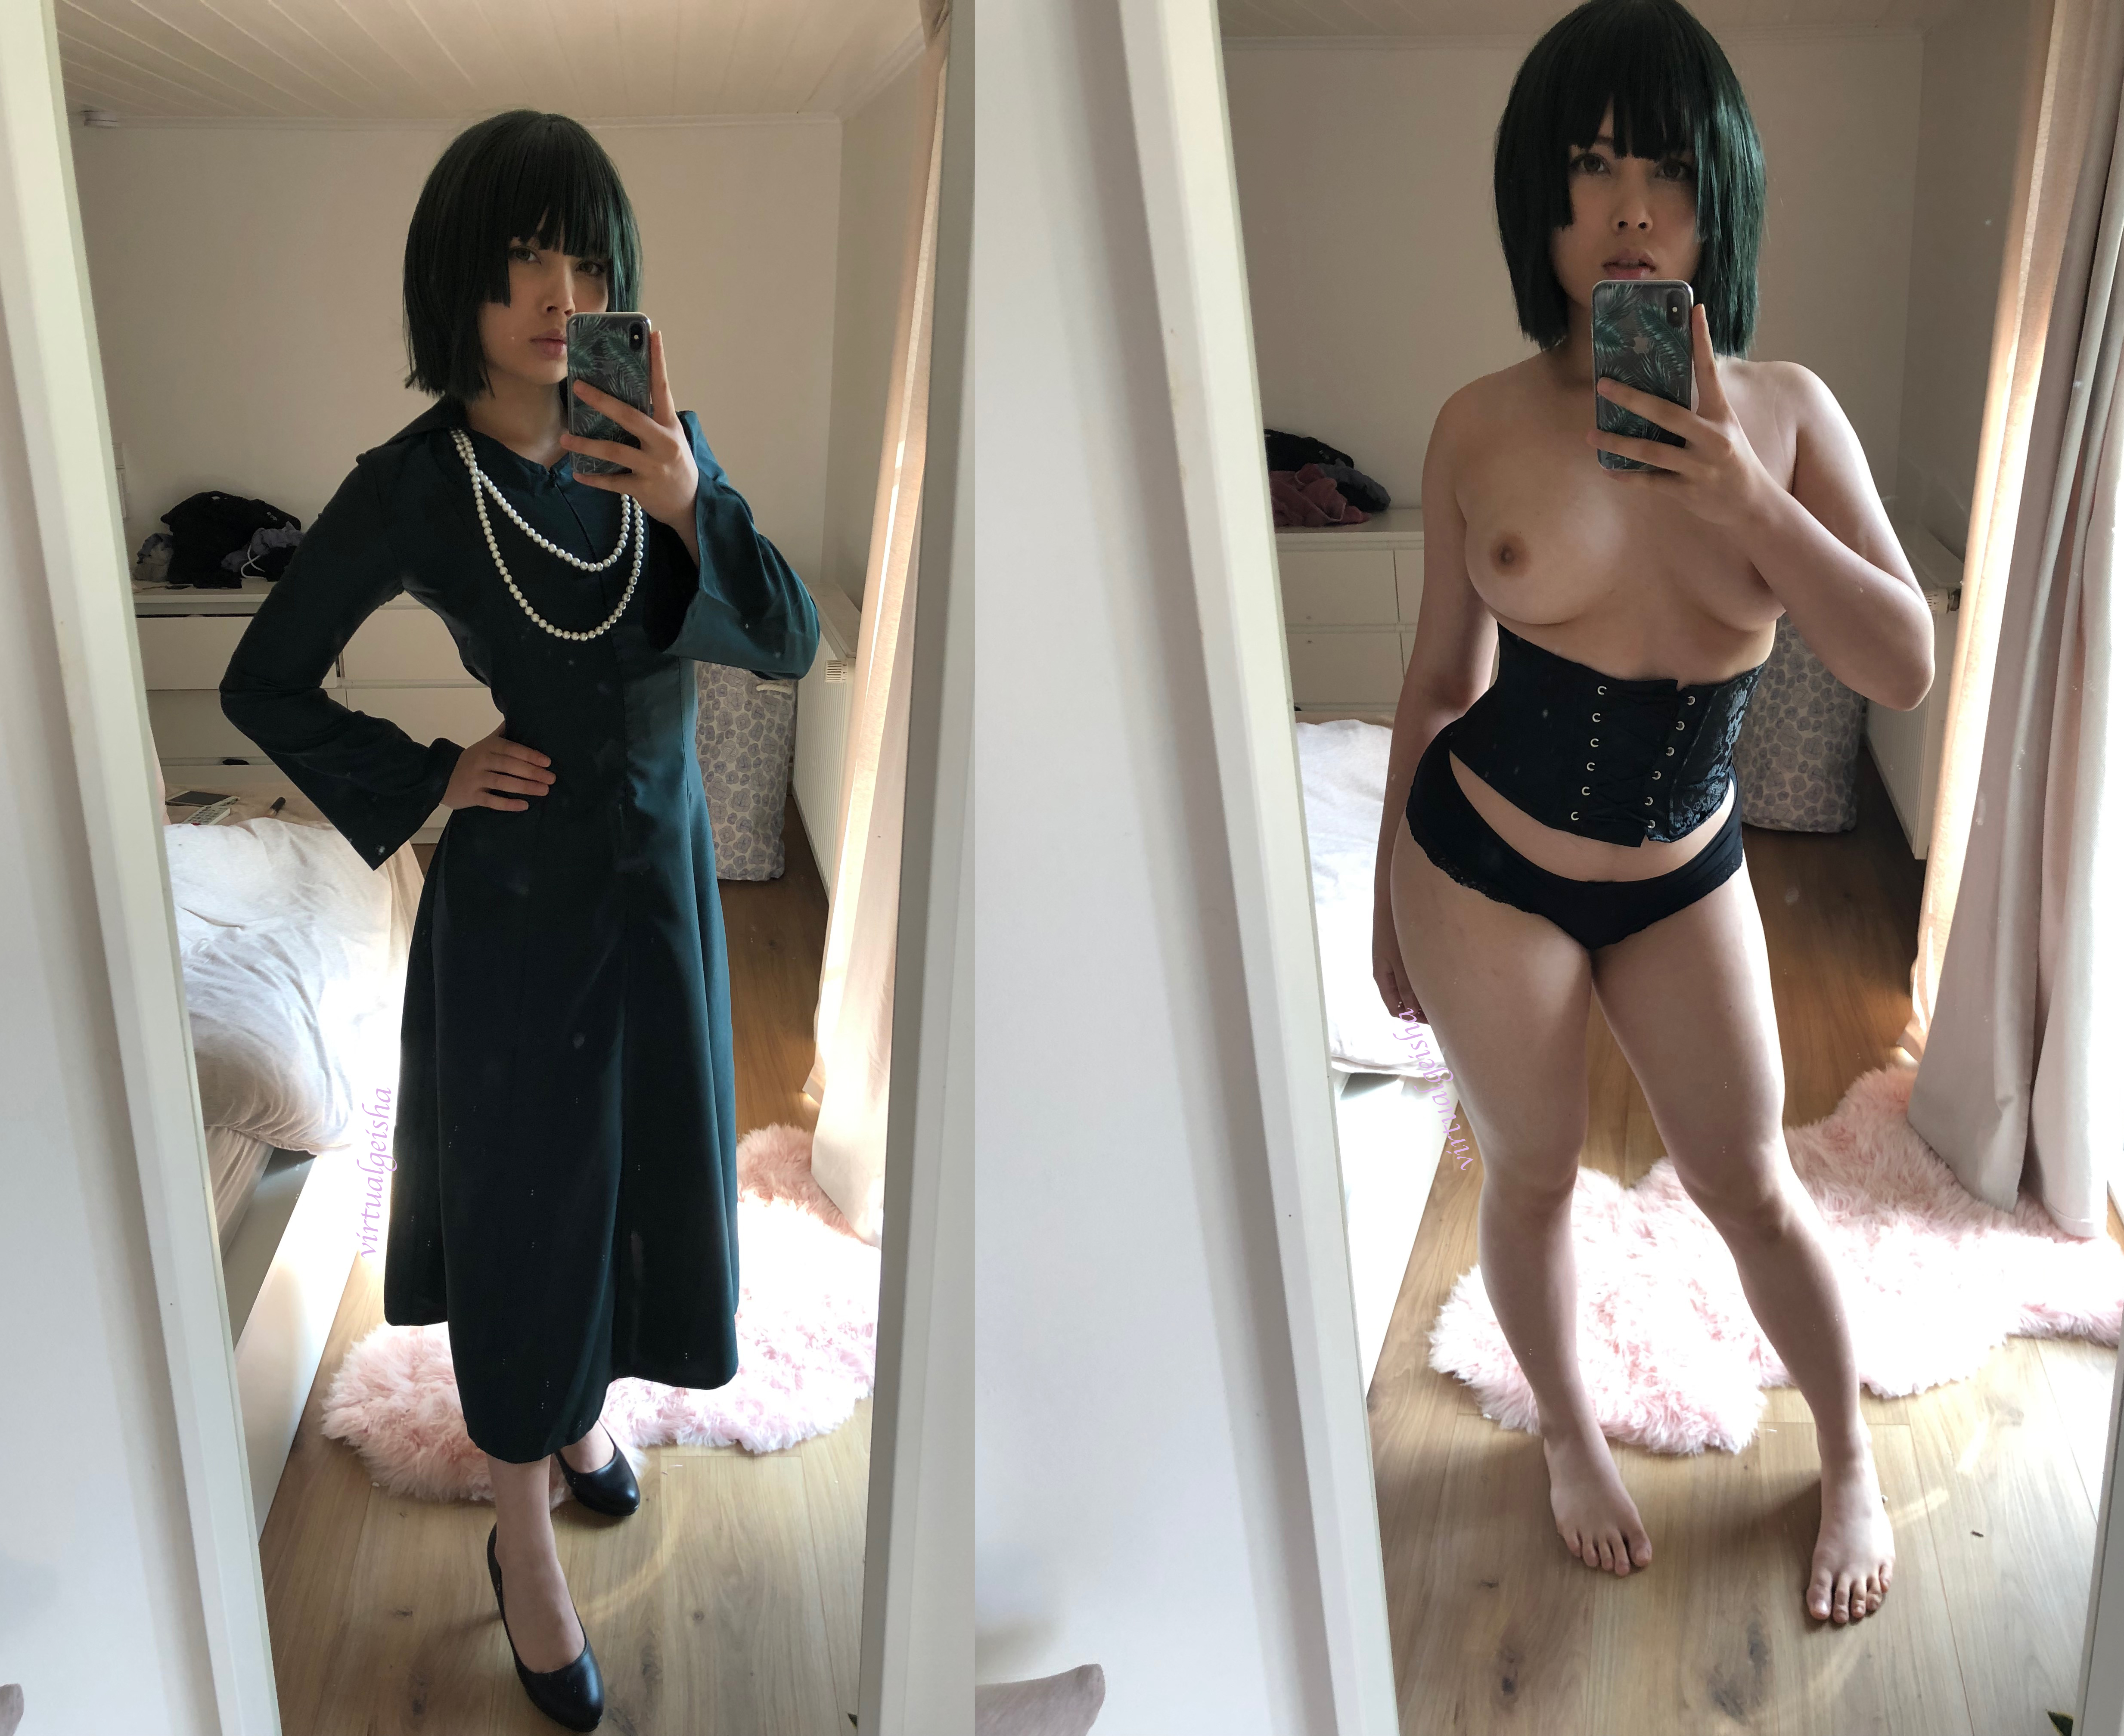 Fubuki mirror selfies by Virtual Geisha